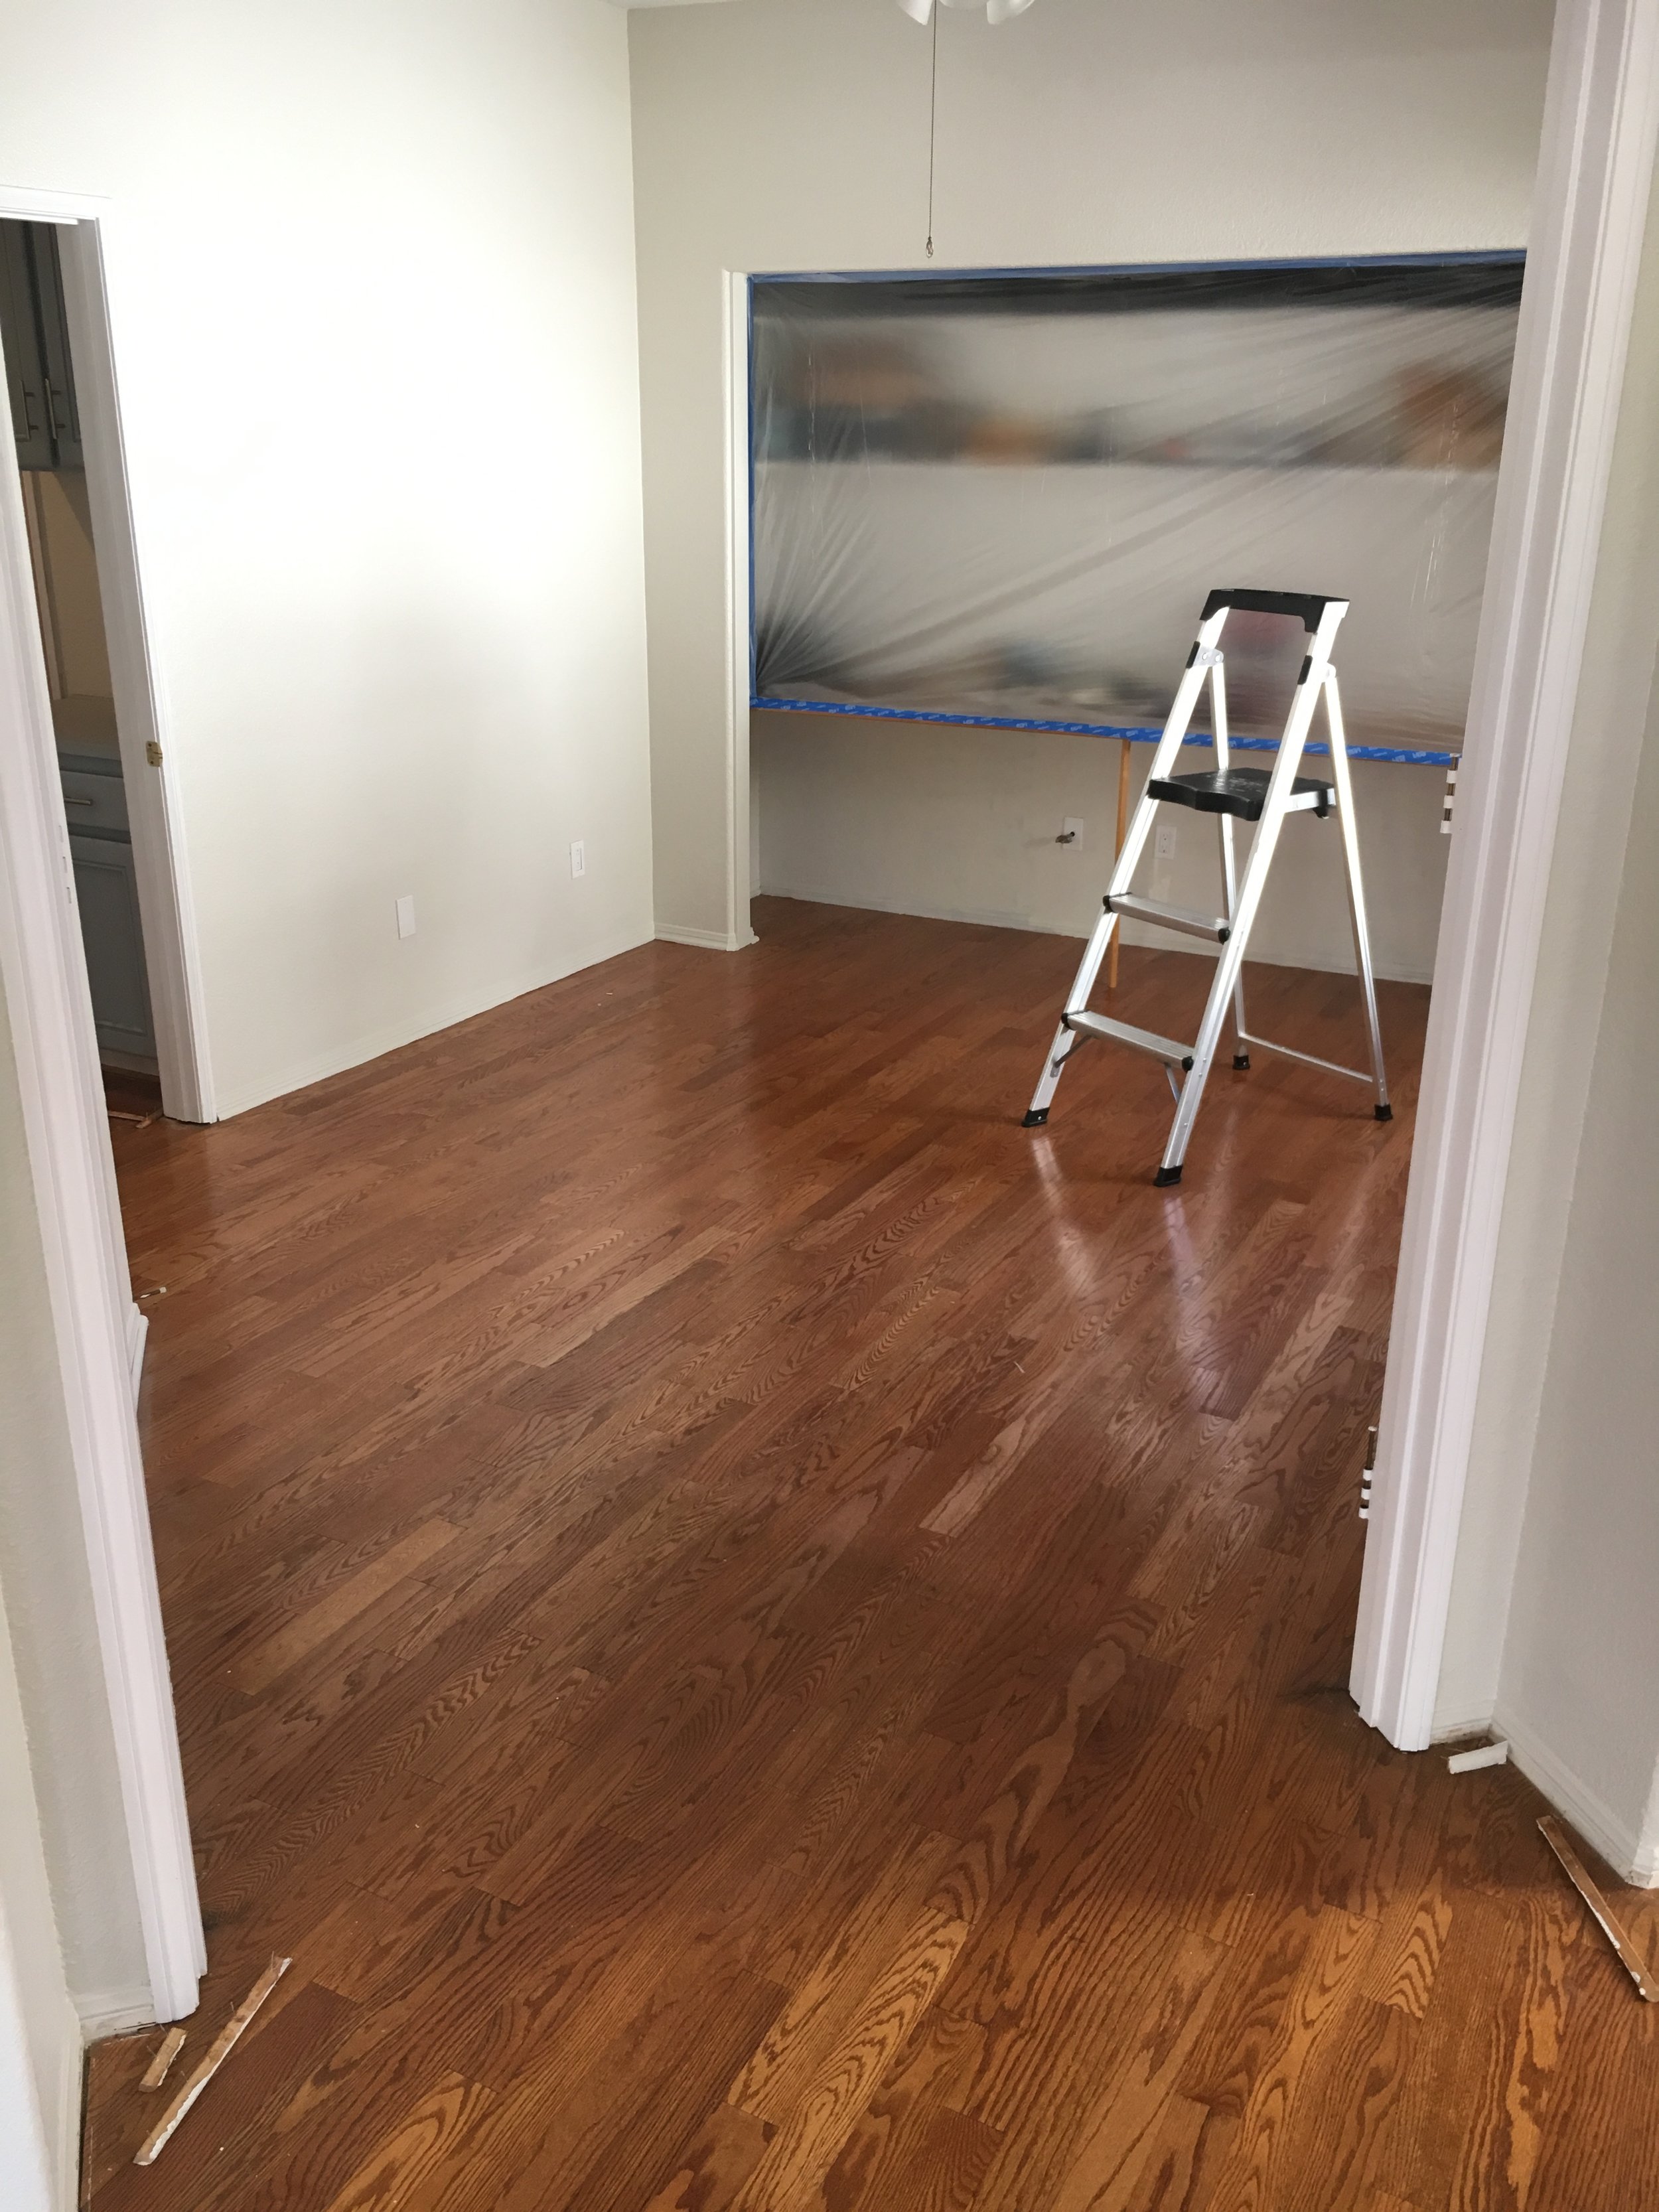 Refinishing Woodchuck Flooring San Diego, Hardwood Floor Refinishing San Diego Cost